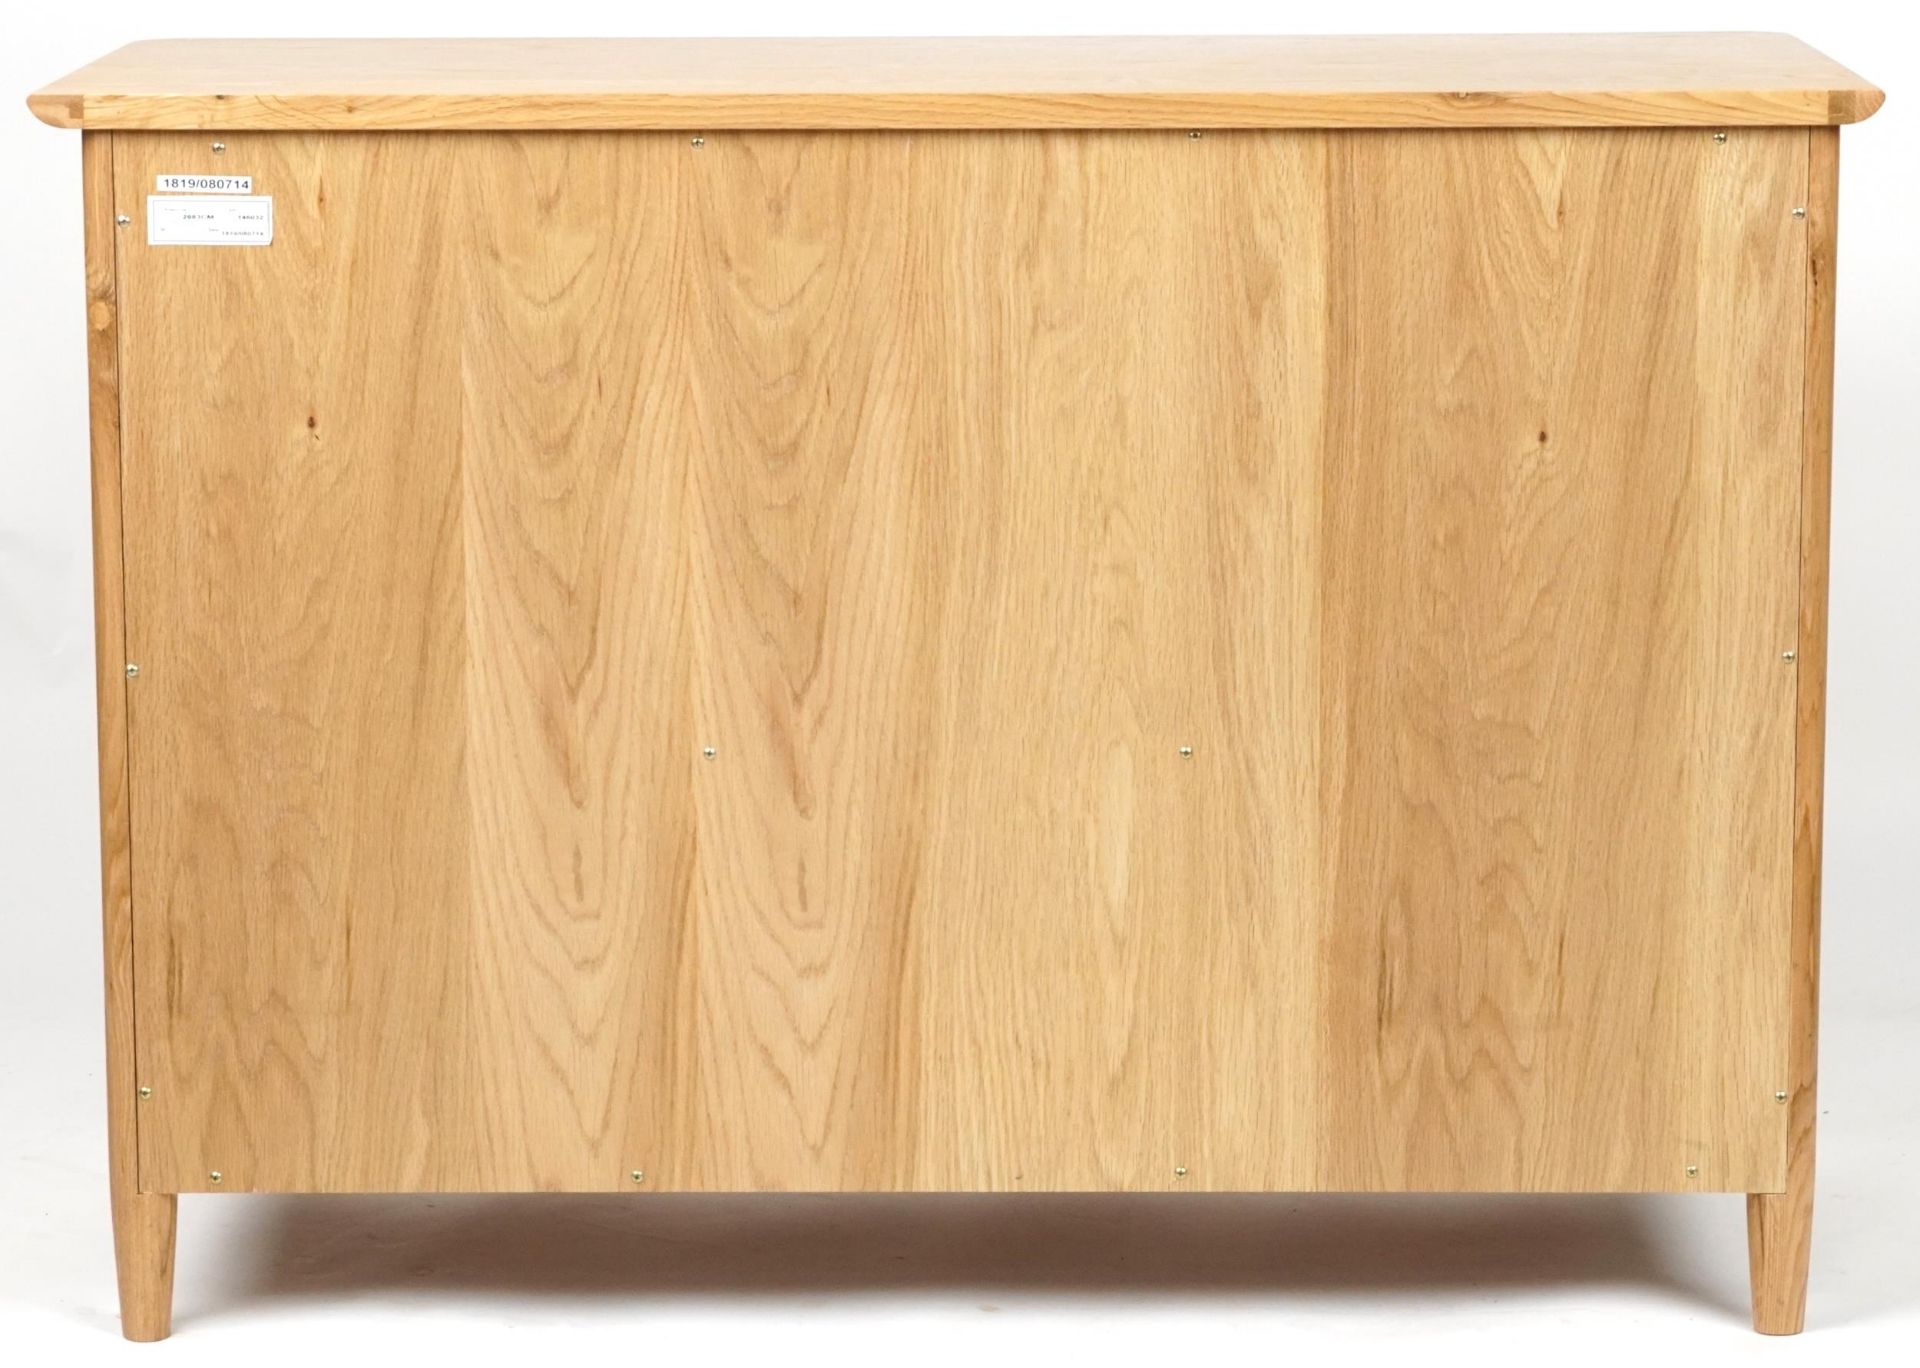 Ercol Teramo contemporary light oak five drawer chest, 79cm H x 114cm W x 47cm D - Image 4 of 6